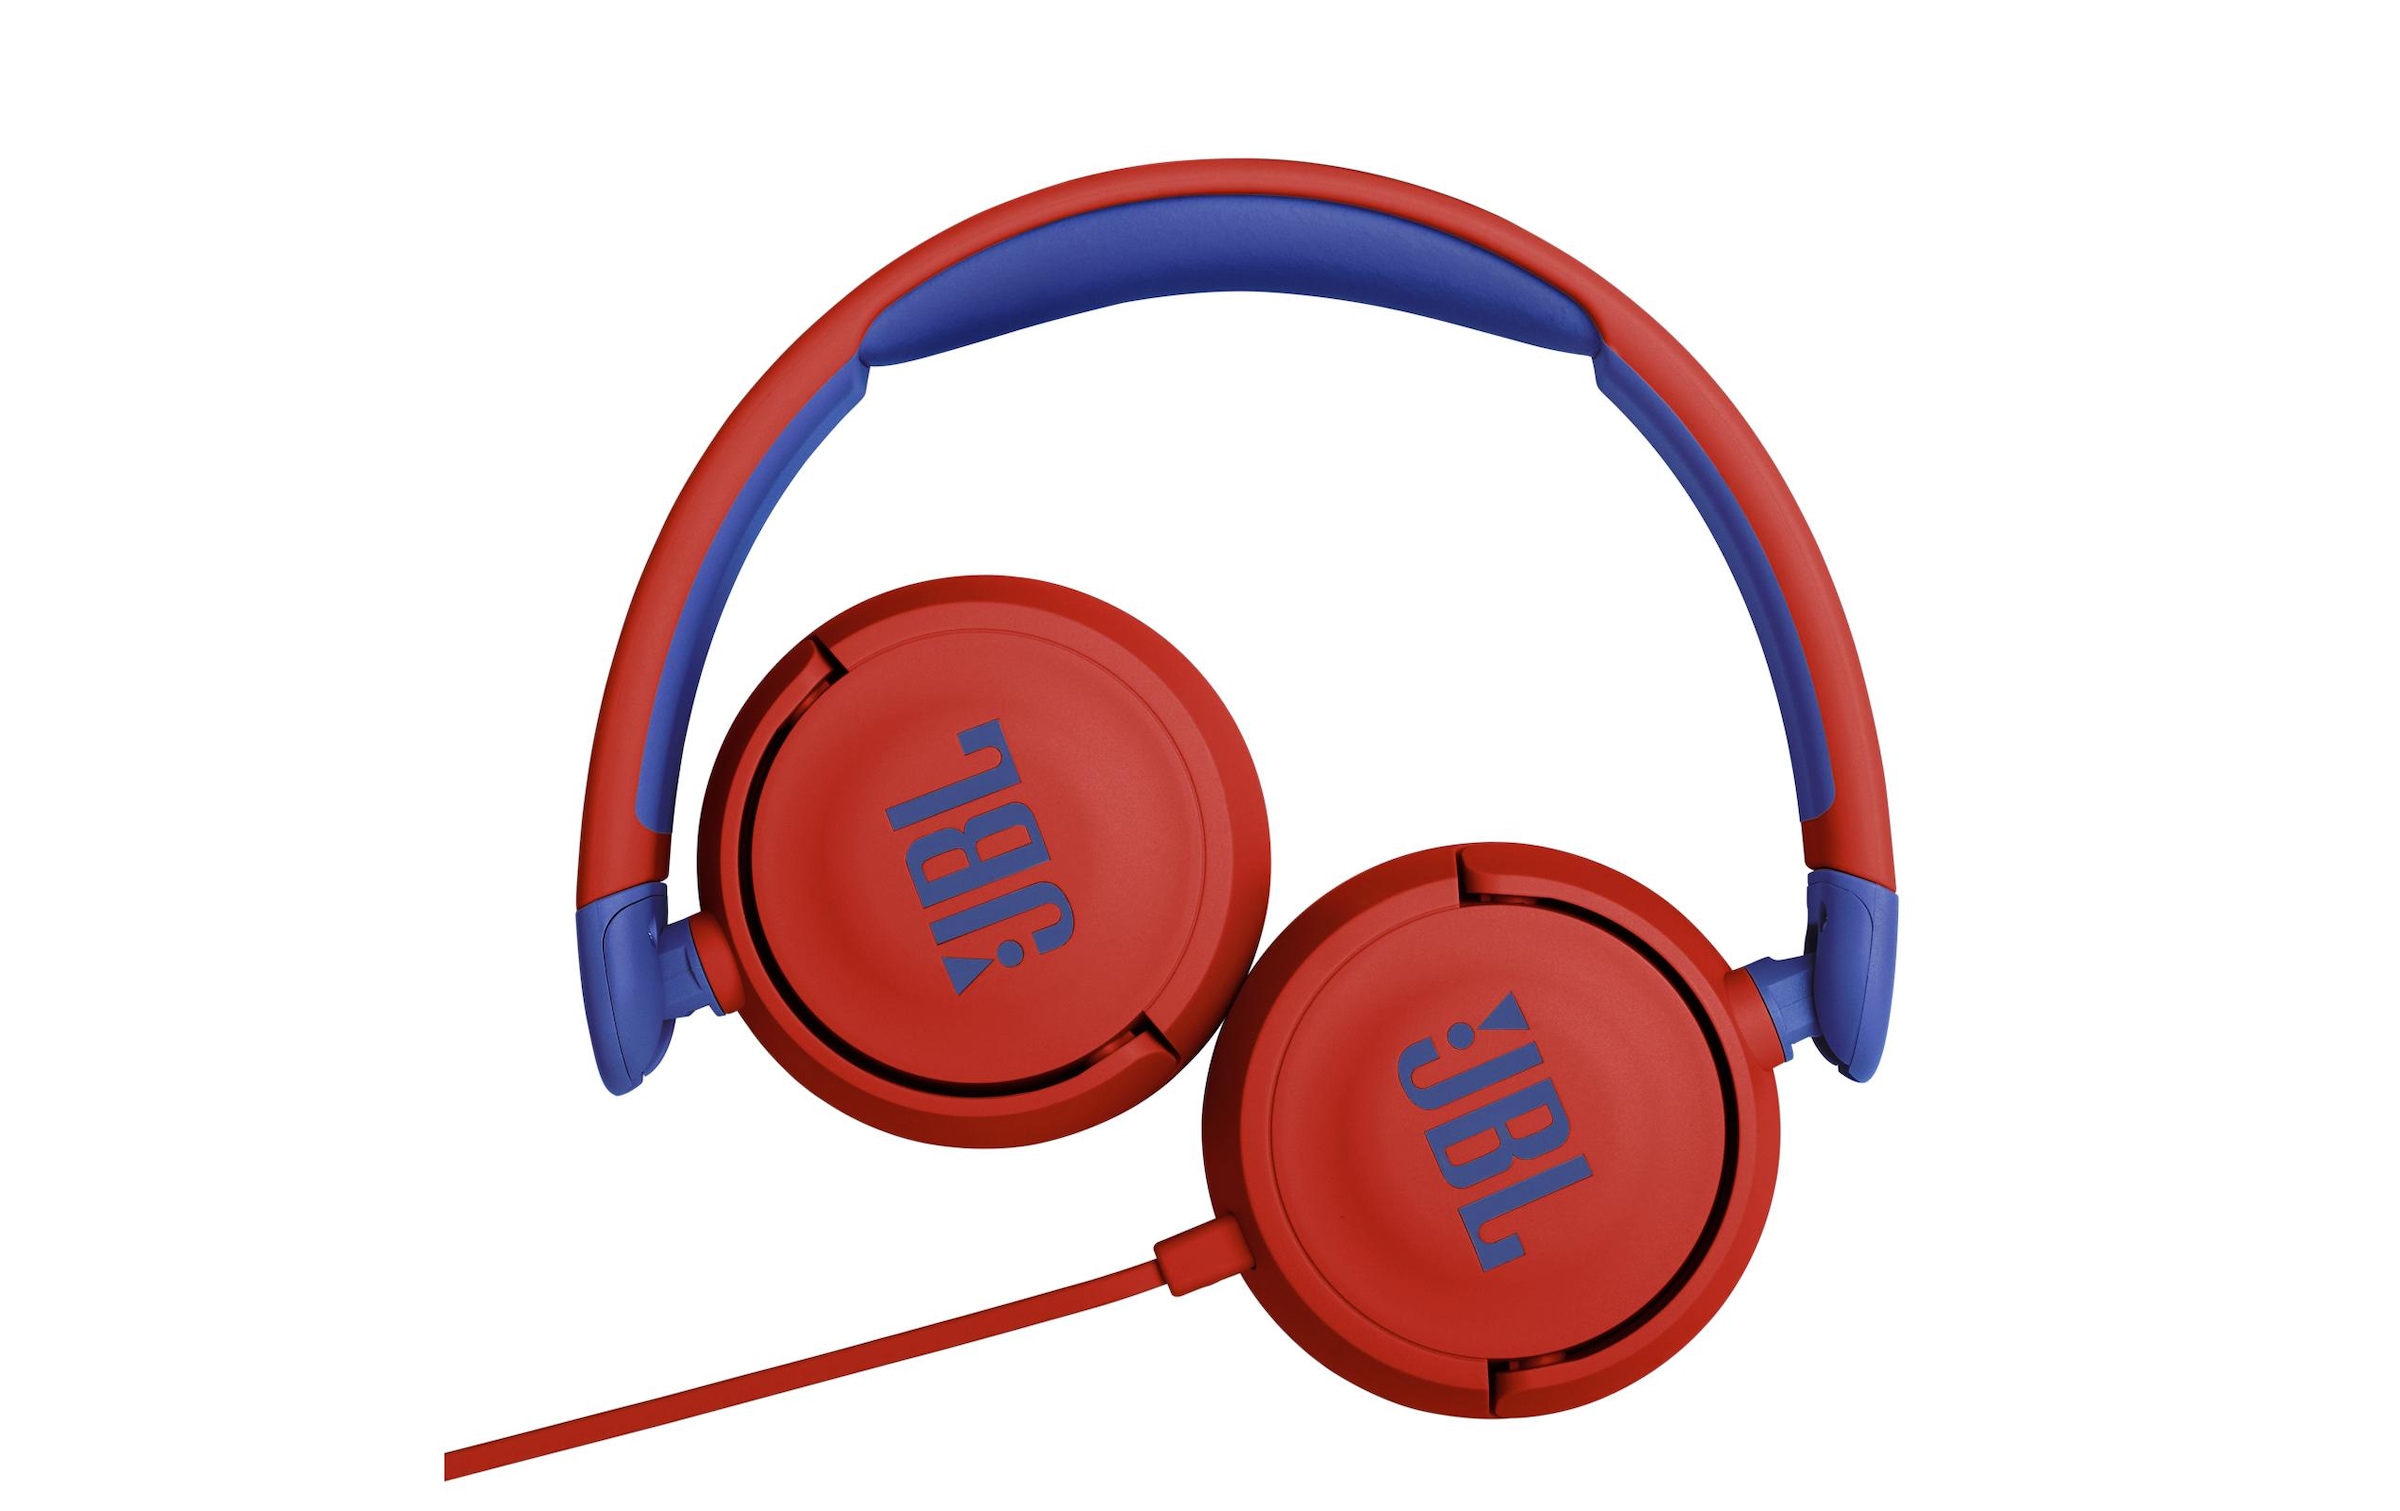 JBL On-Ear-Kopfhörer »JR310 Blau, Ro«, Mikrofon